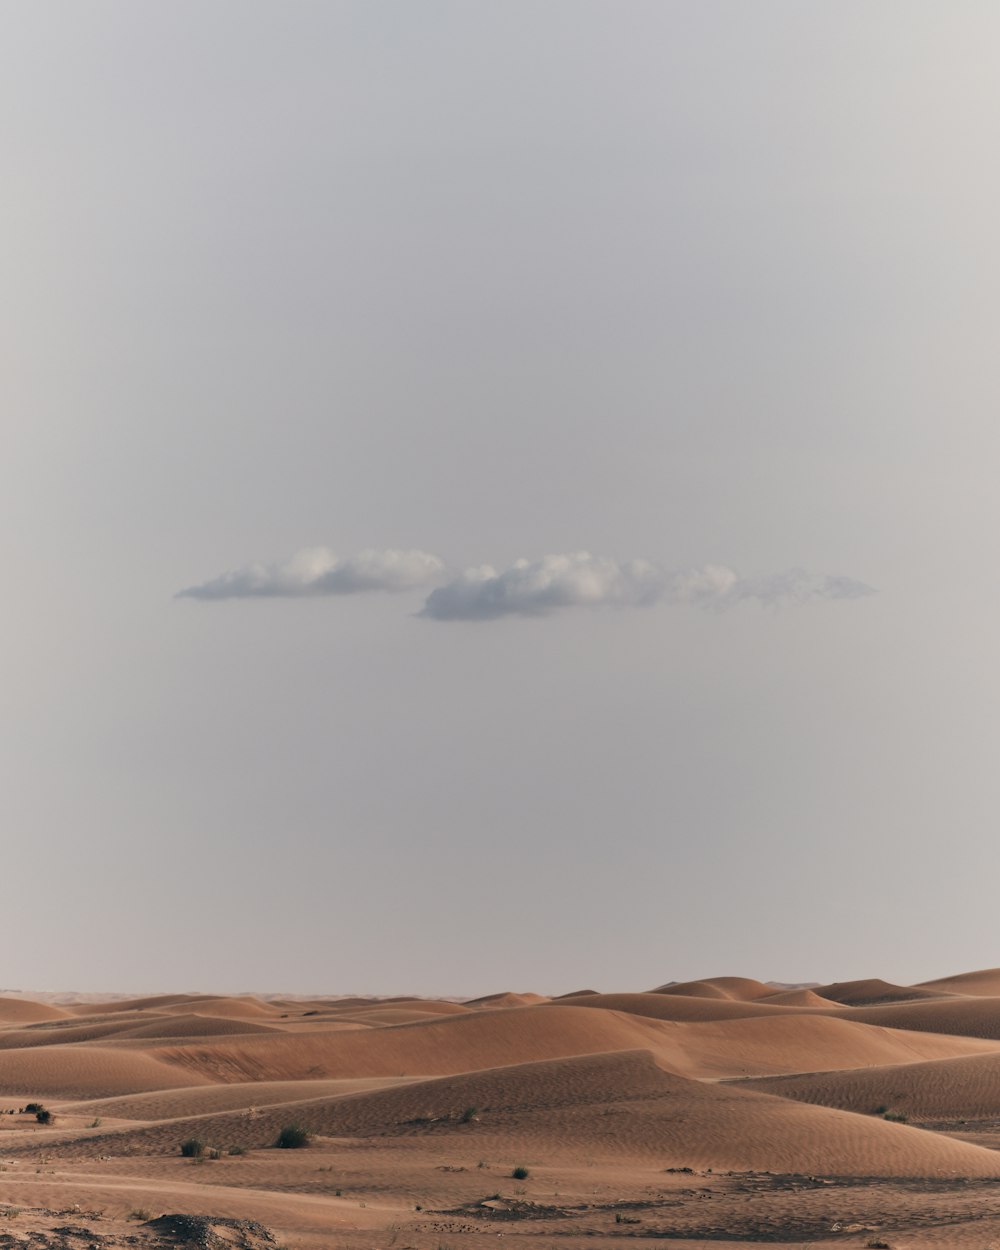 a desert landscape with a cloudy sky